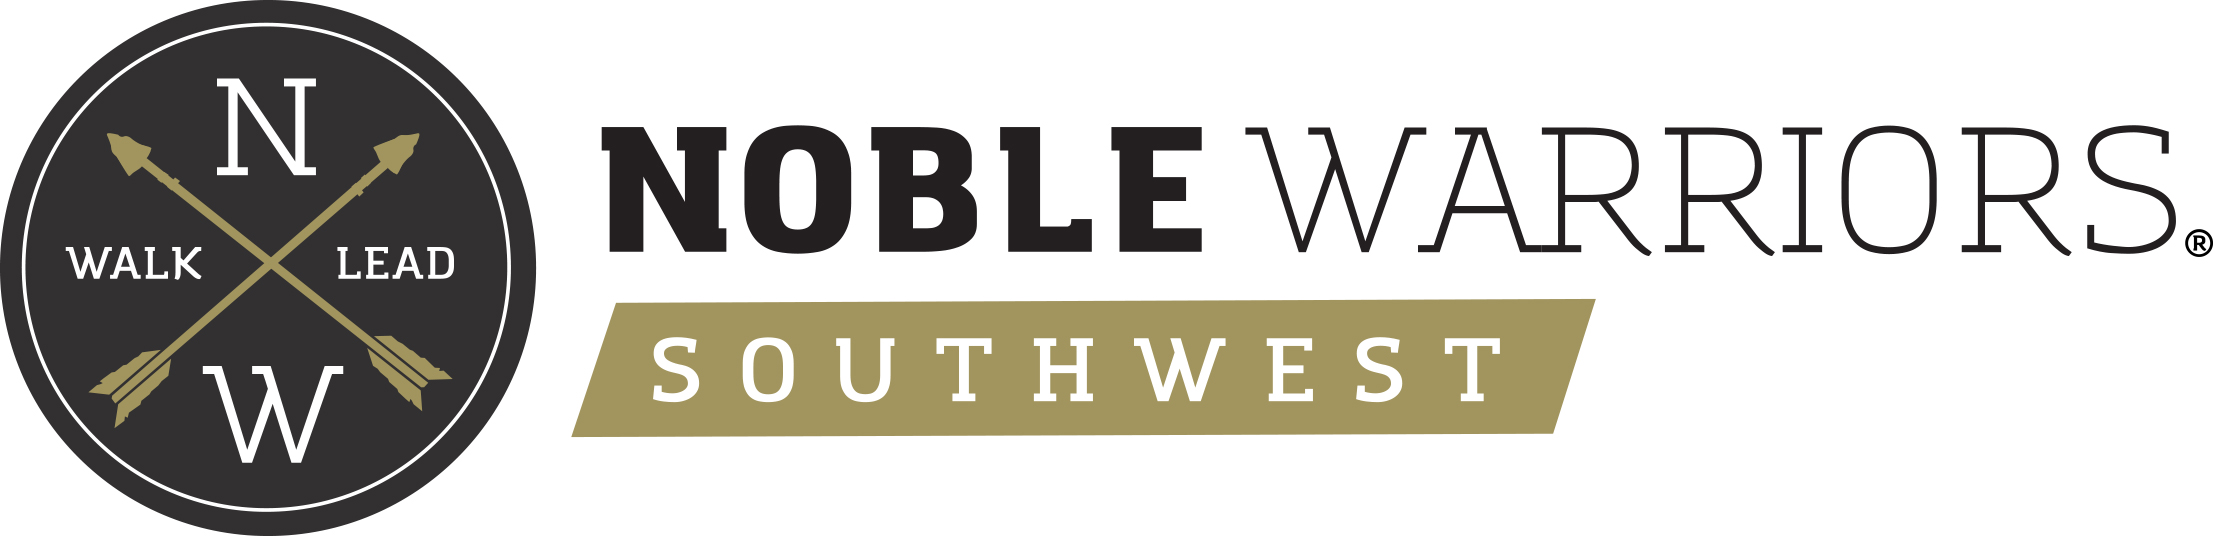 NW-regional-logo-SOUTHWEST